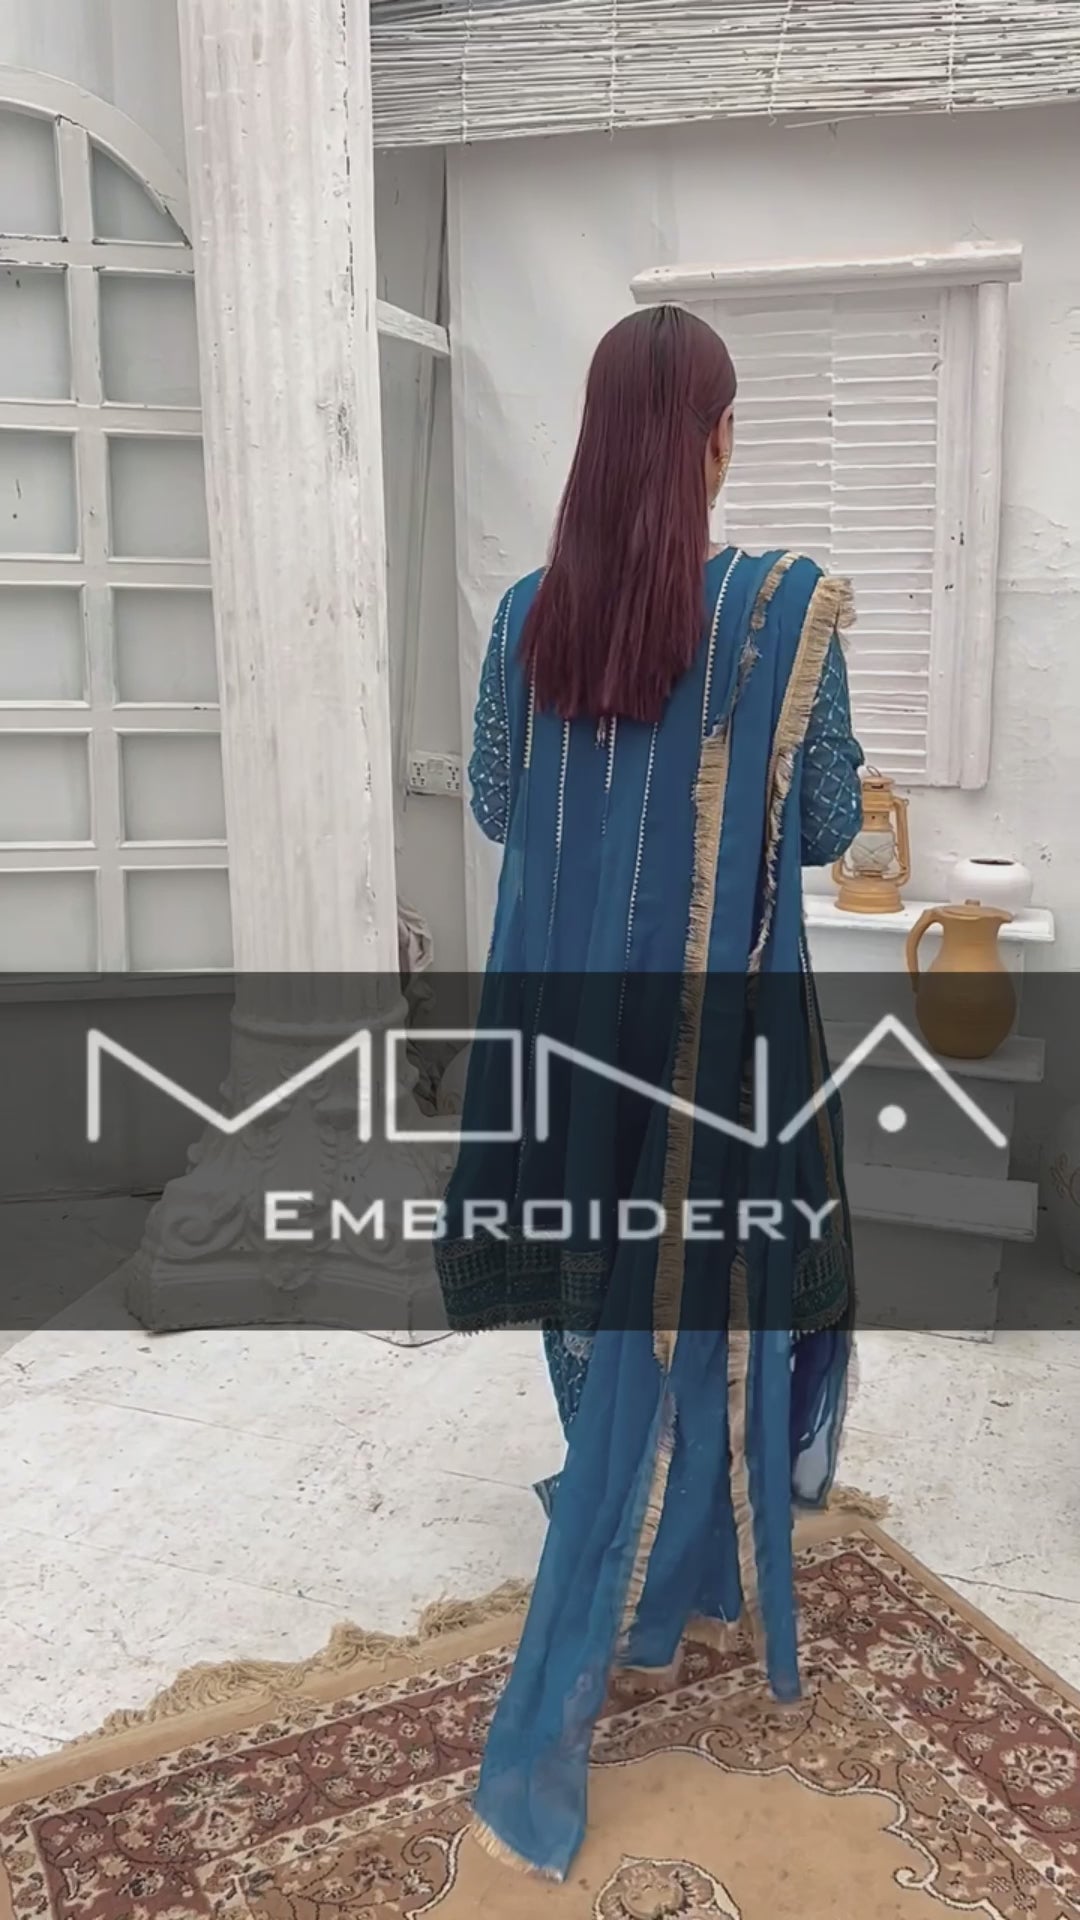 Mona Embroidery